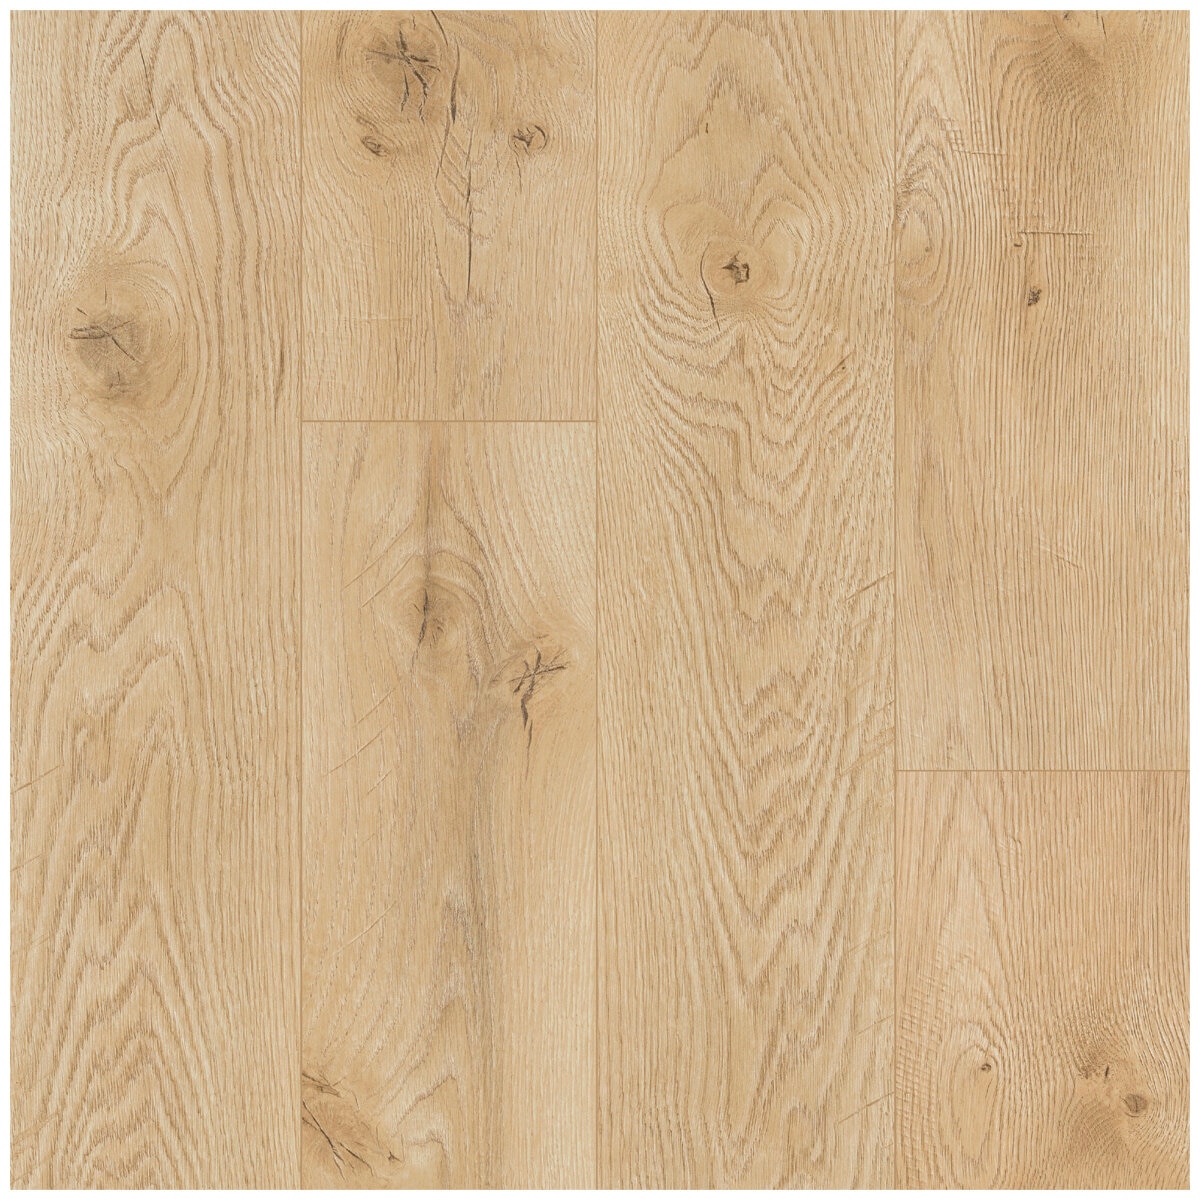 Golden Select Laminate Flooring Oslo Light Oak